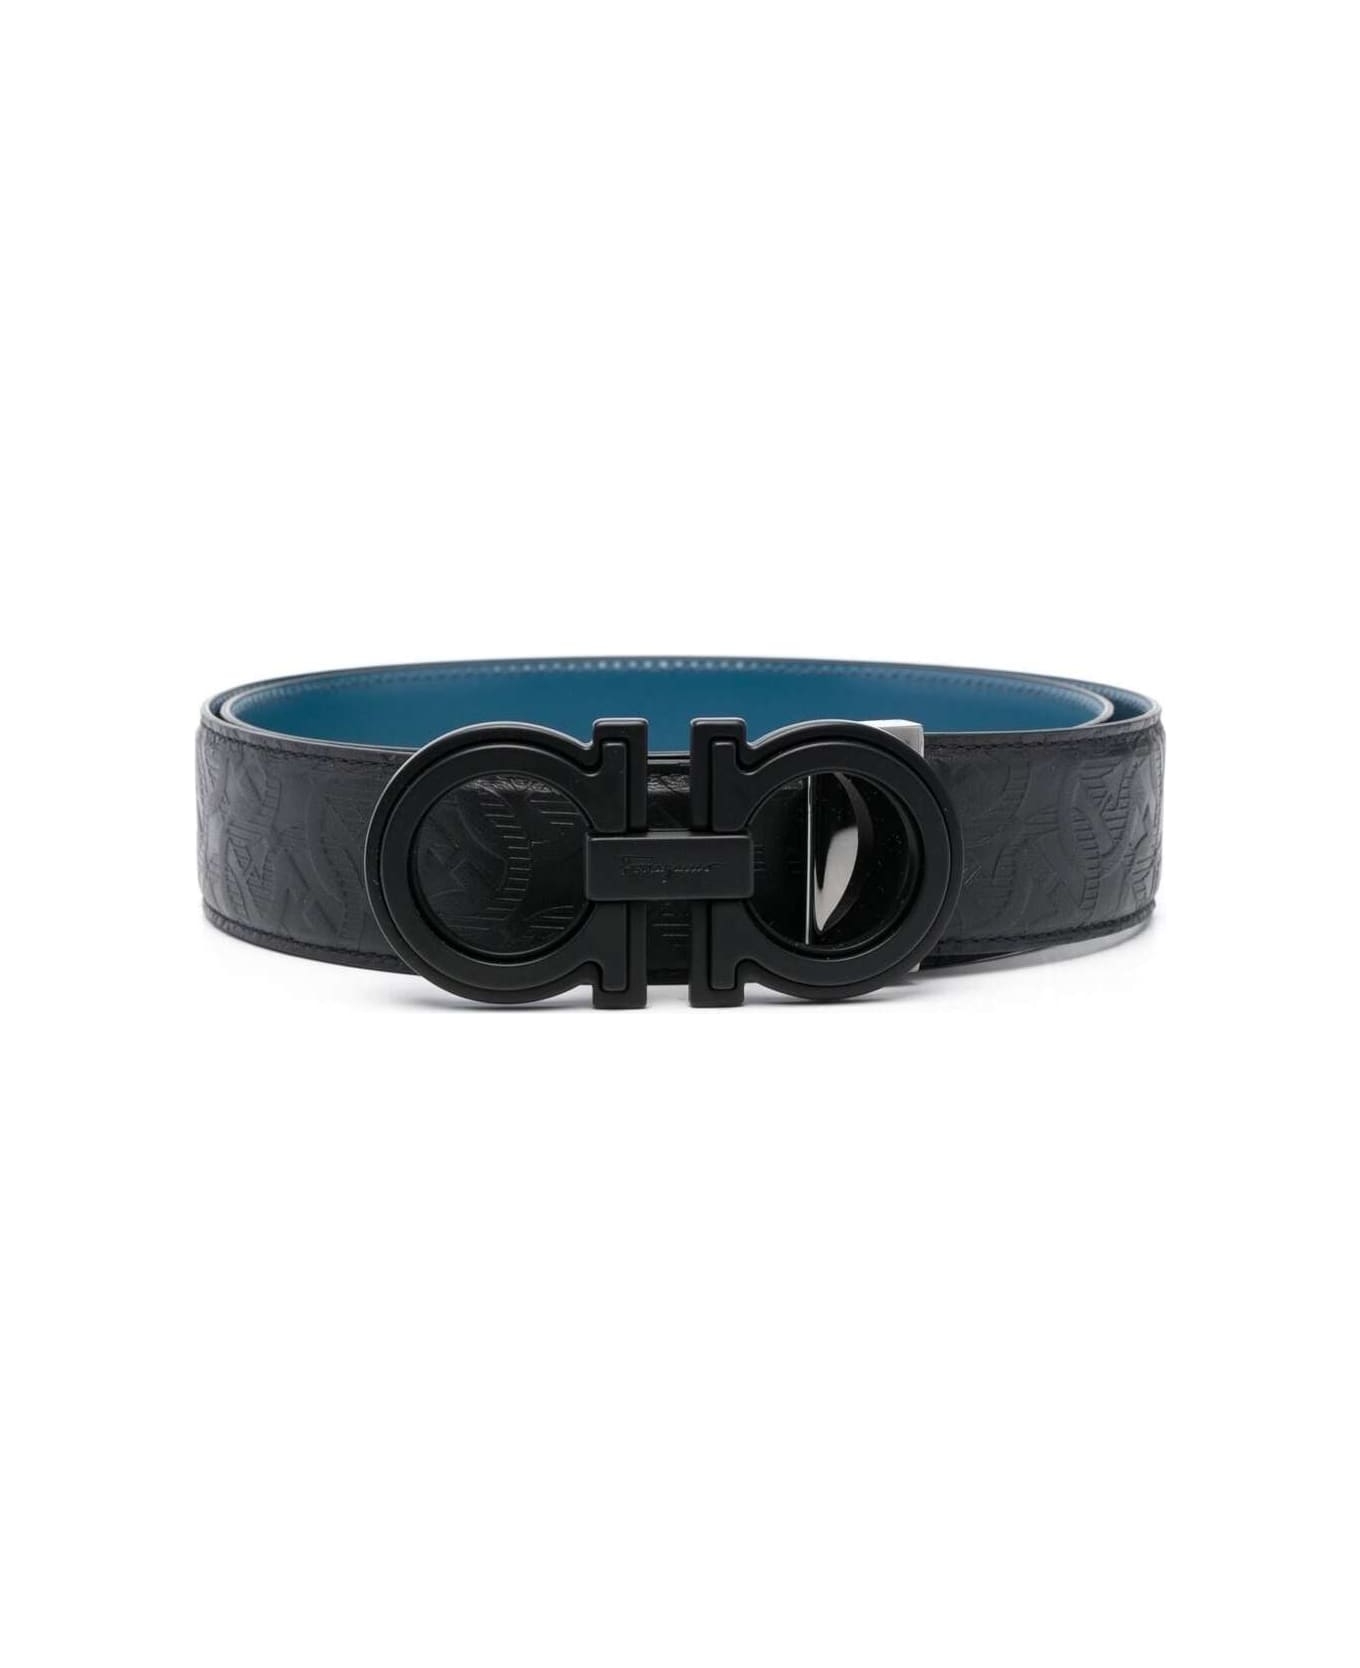 Ferragamo Black And Blue Reversible Belt With Gancini Logo Buckle In Leather Man - Black